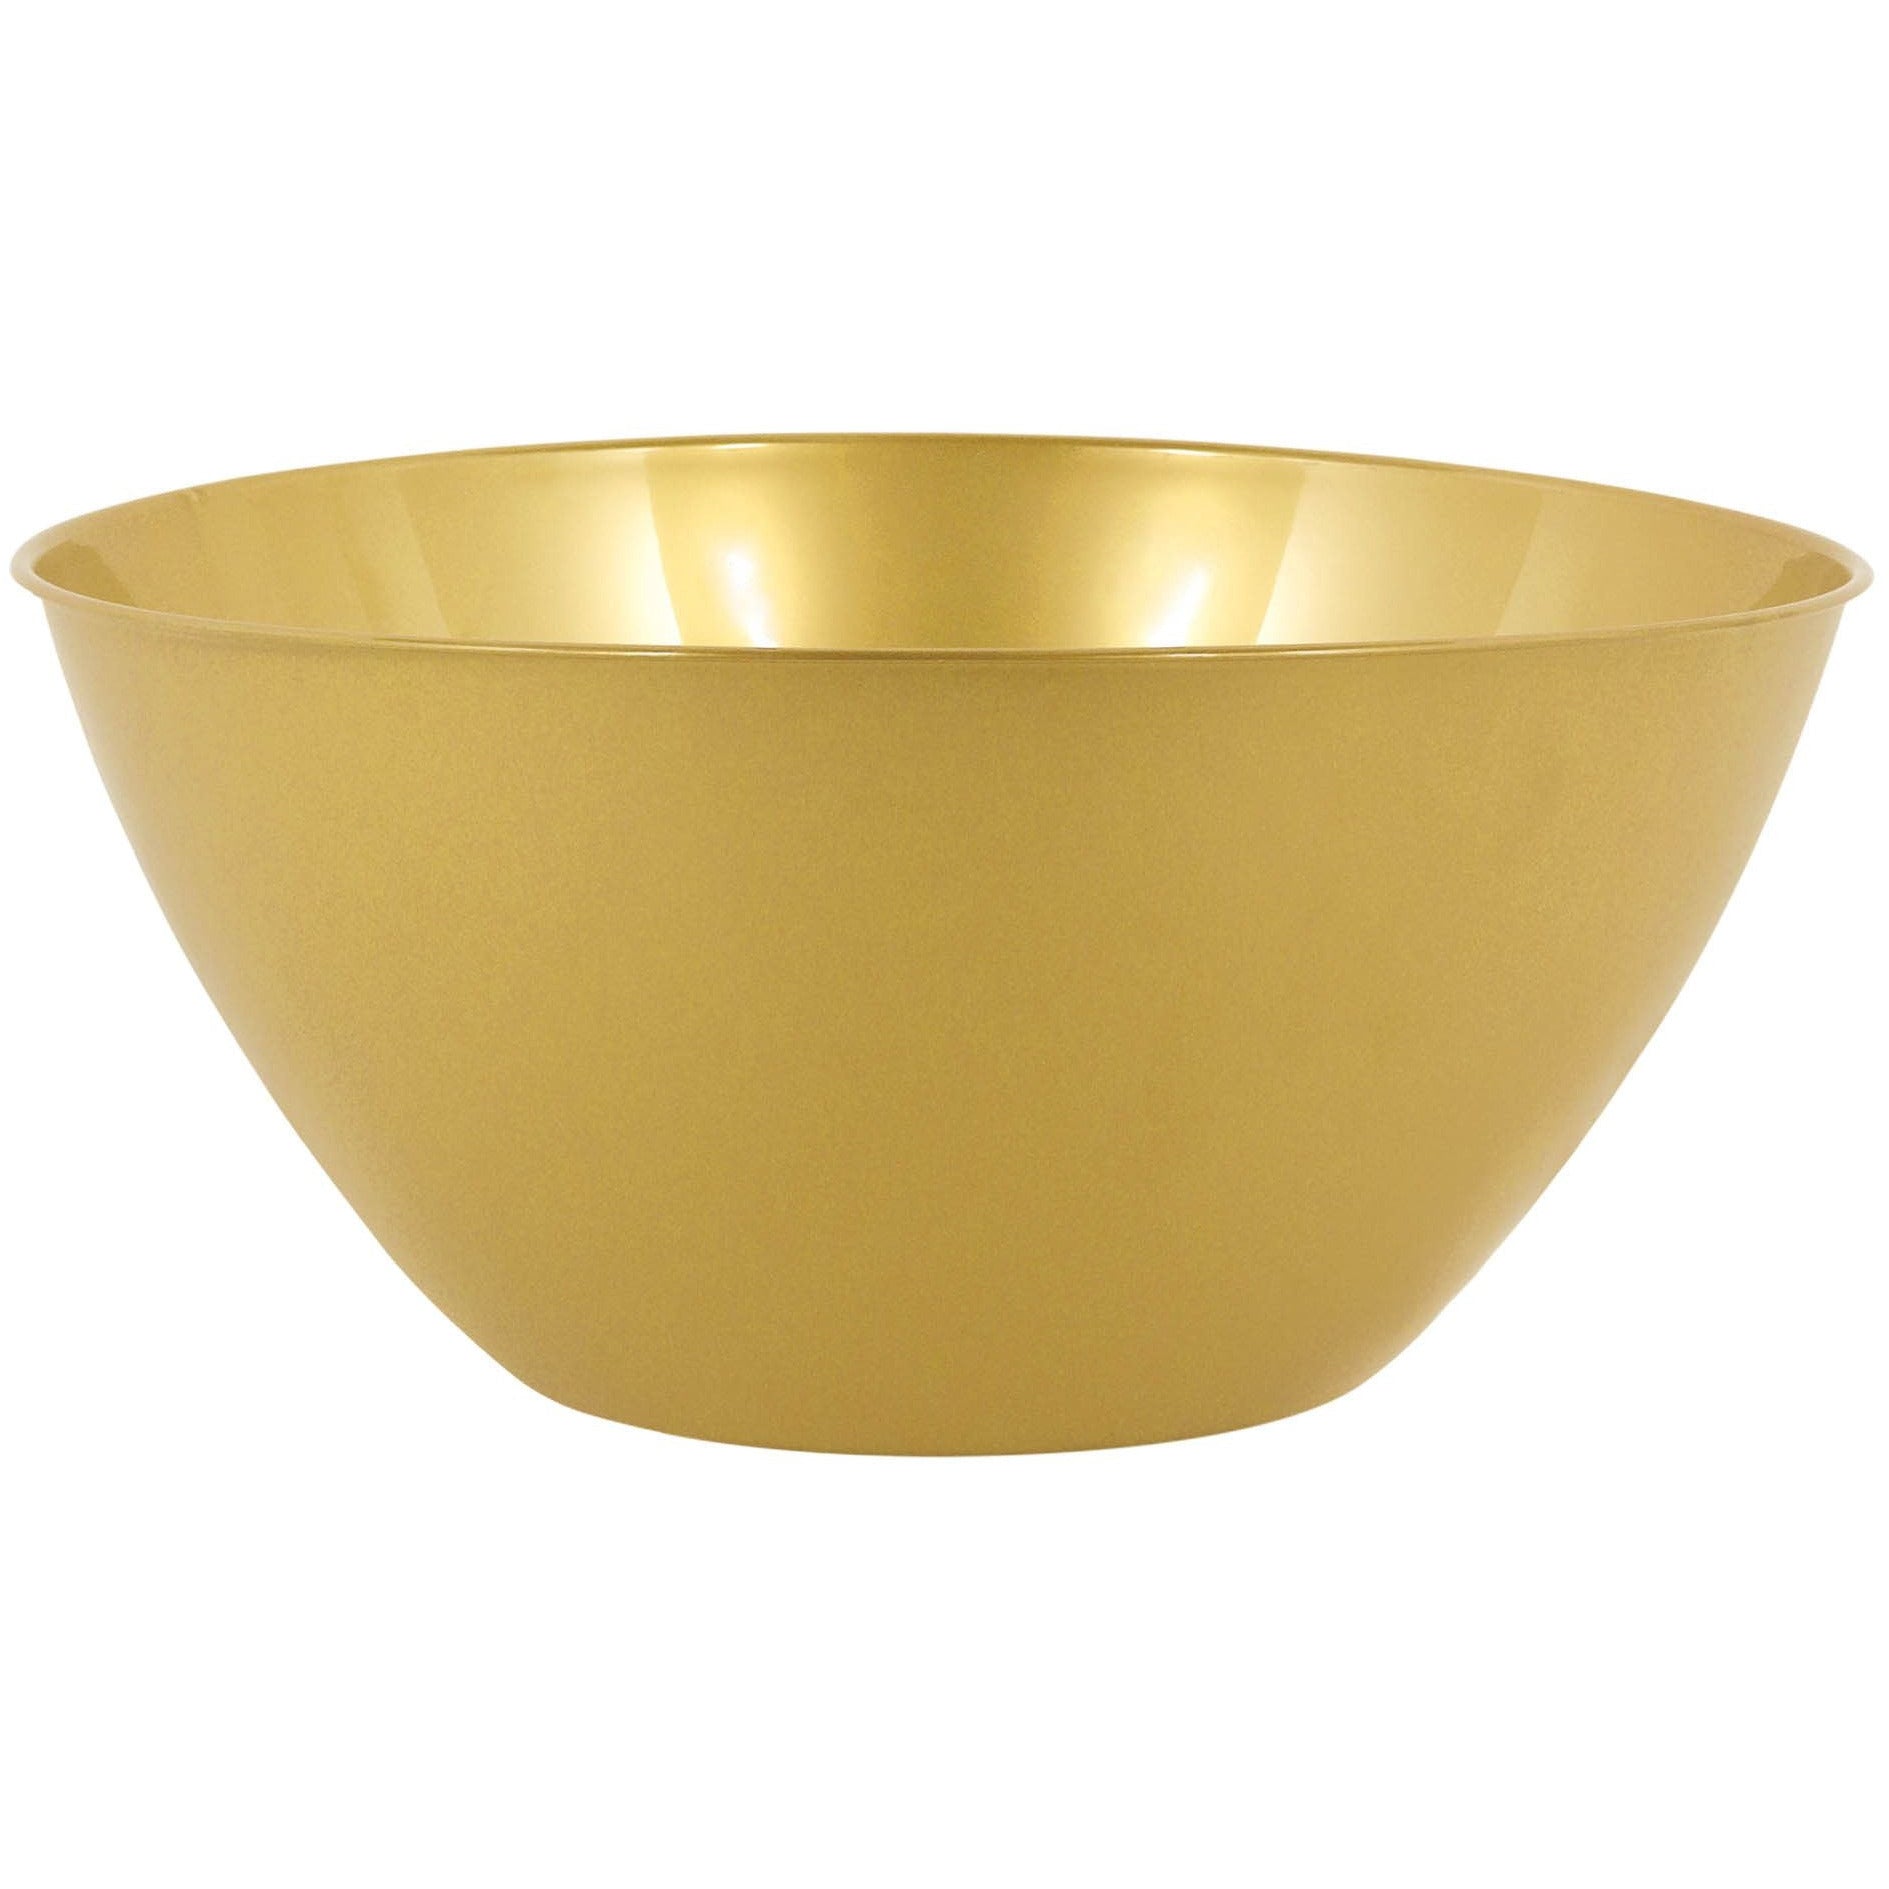 Amscan 2 Qts. Bowl - Gold